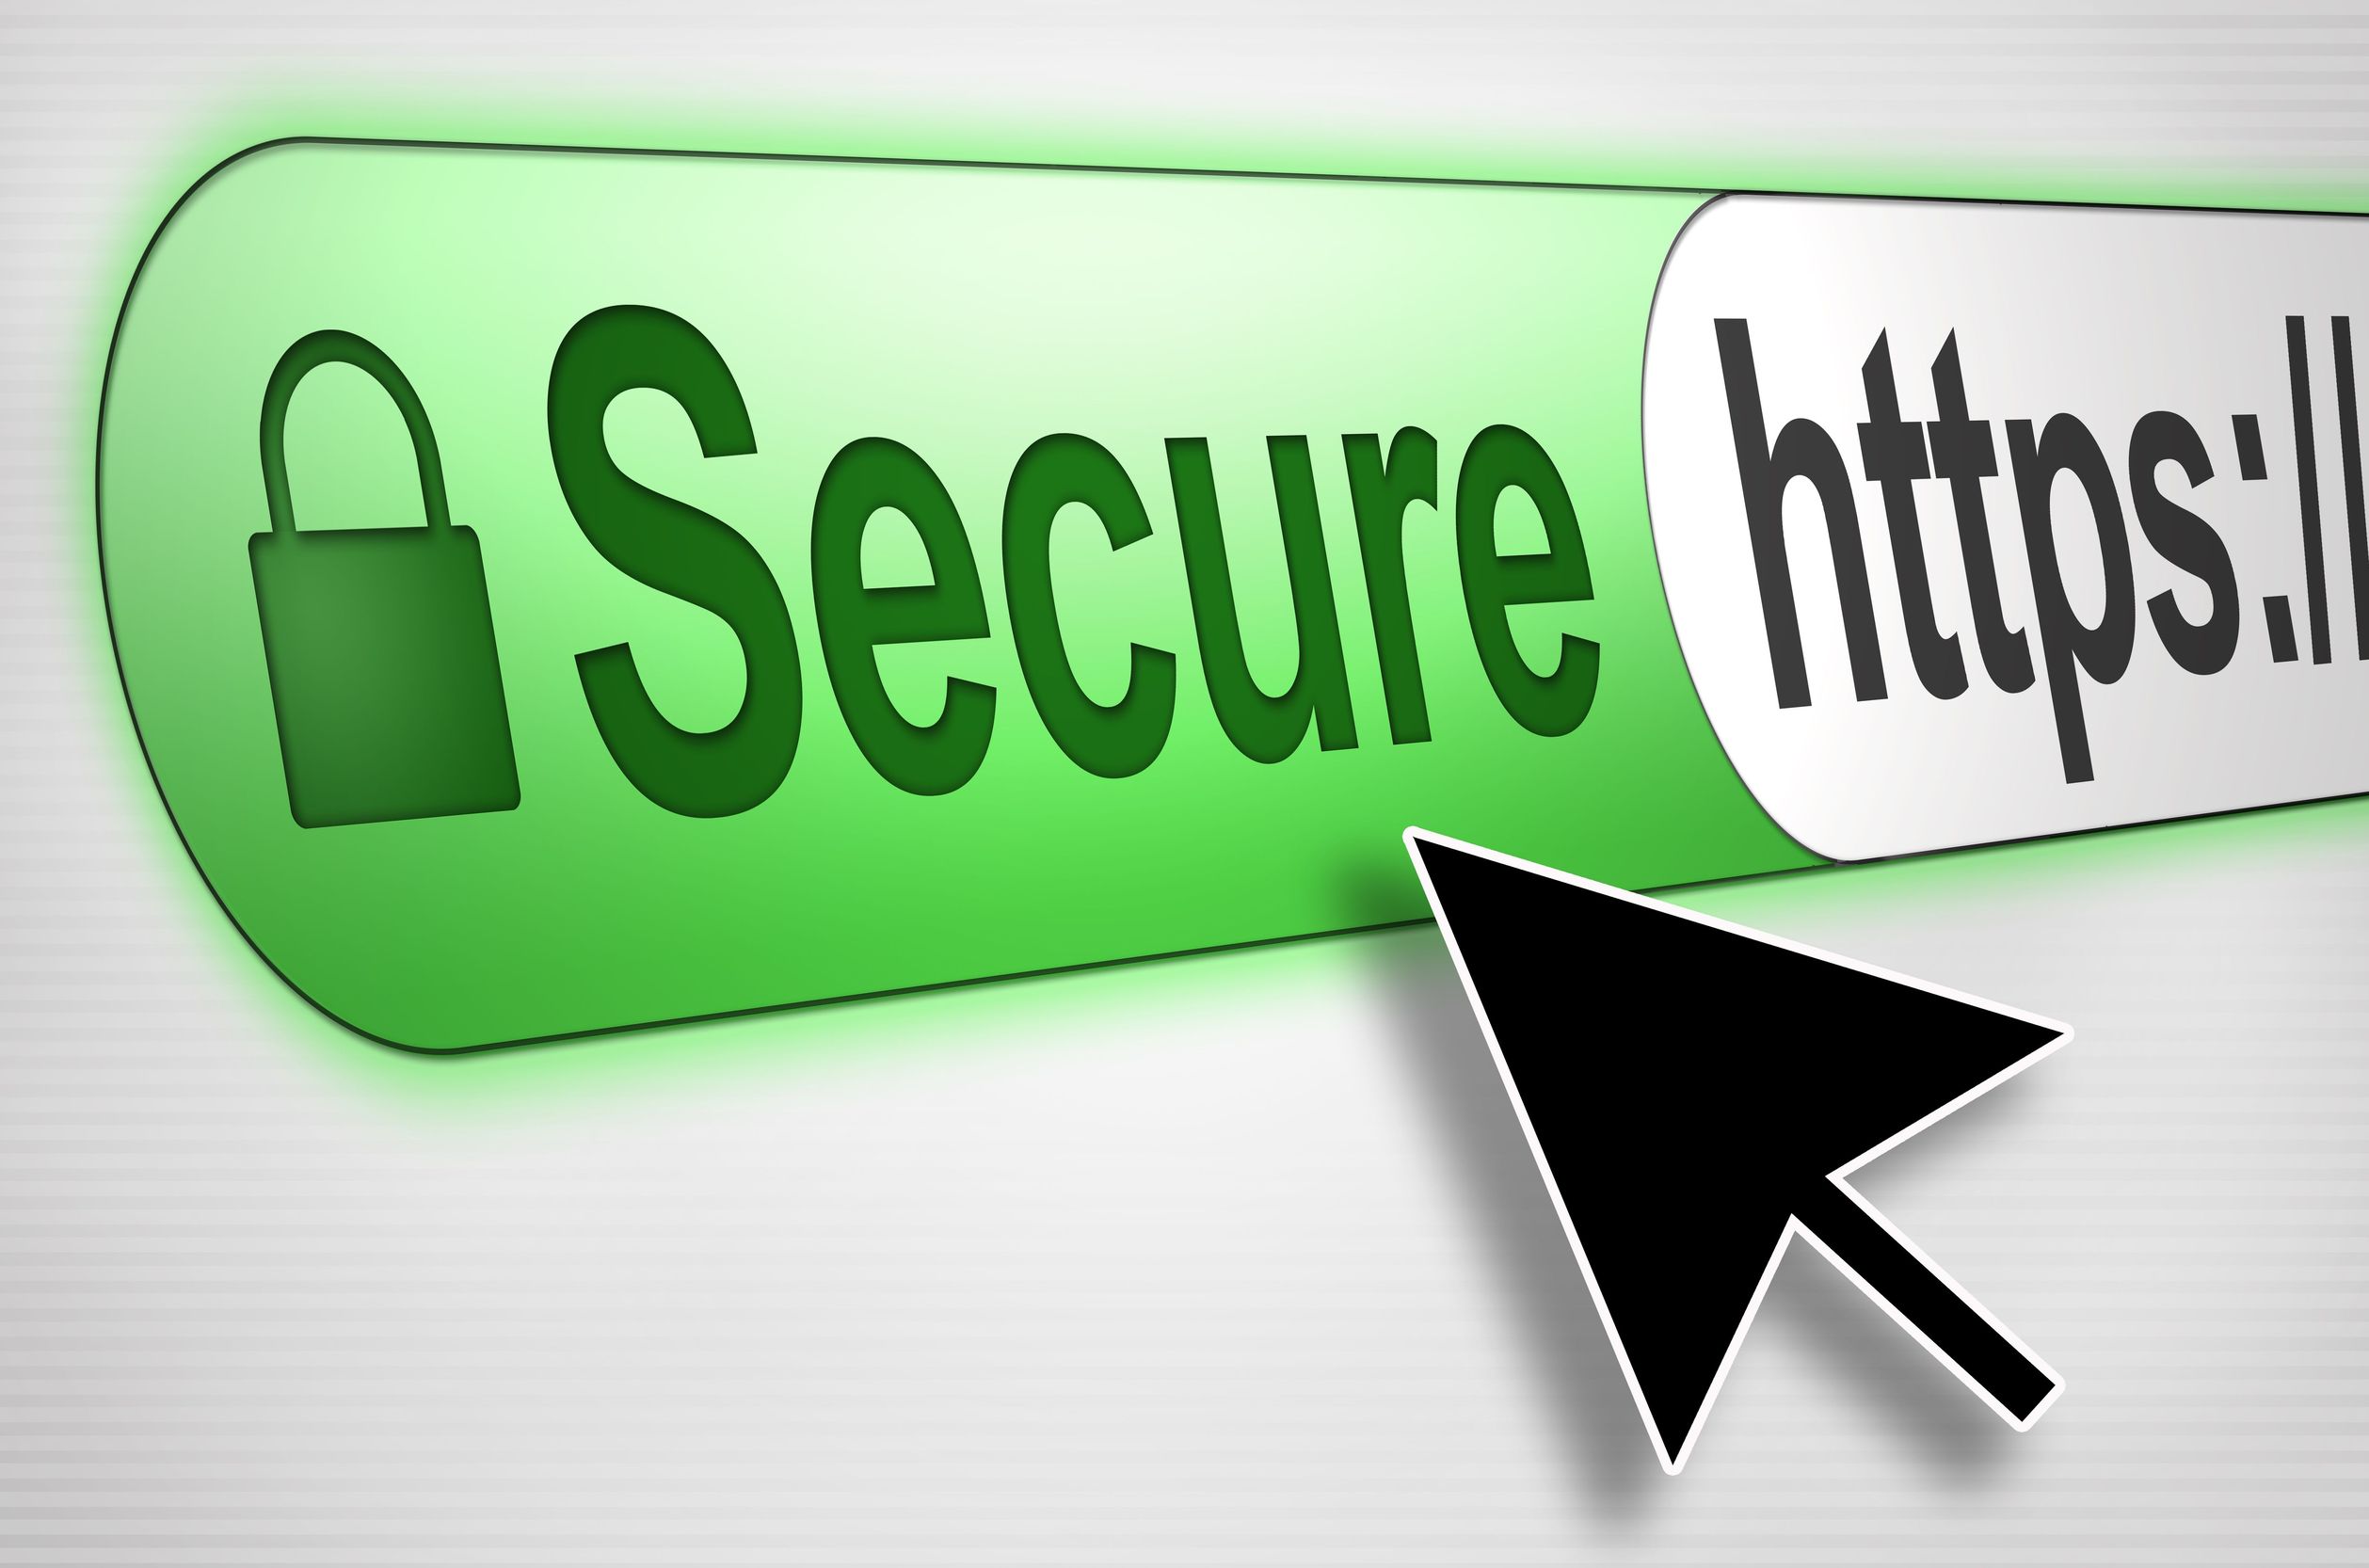 Https. SSL сертификат. Защищено SSL. SSL картинка. SSL сертификат картинки.